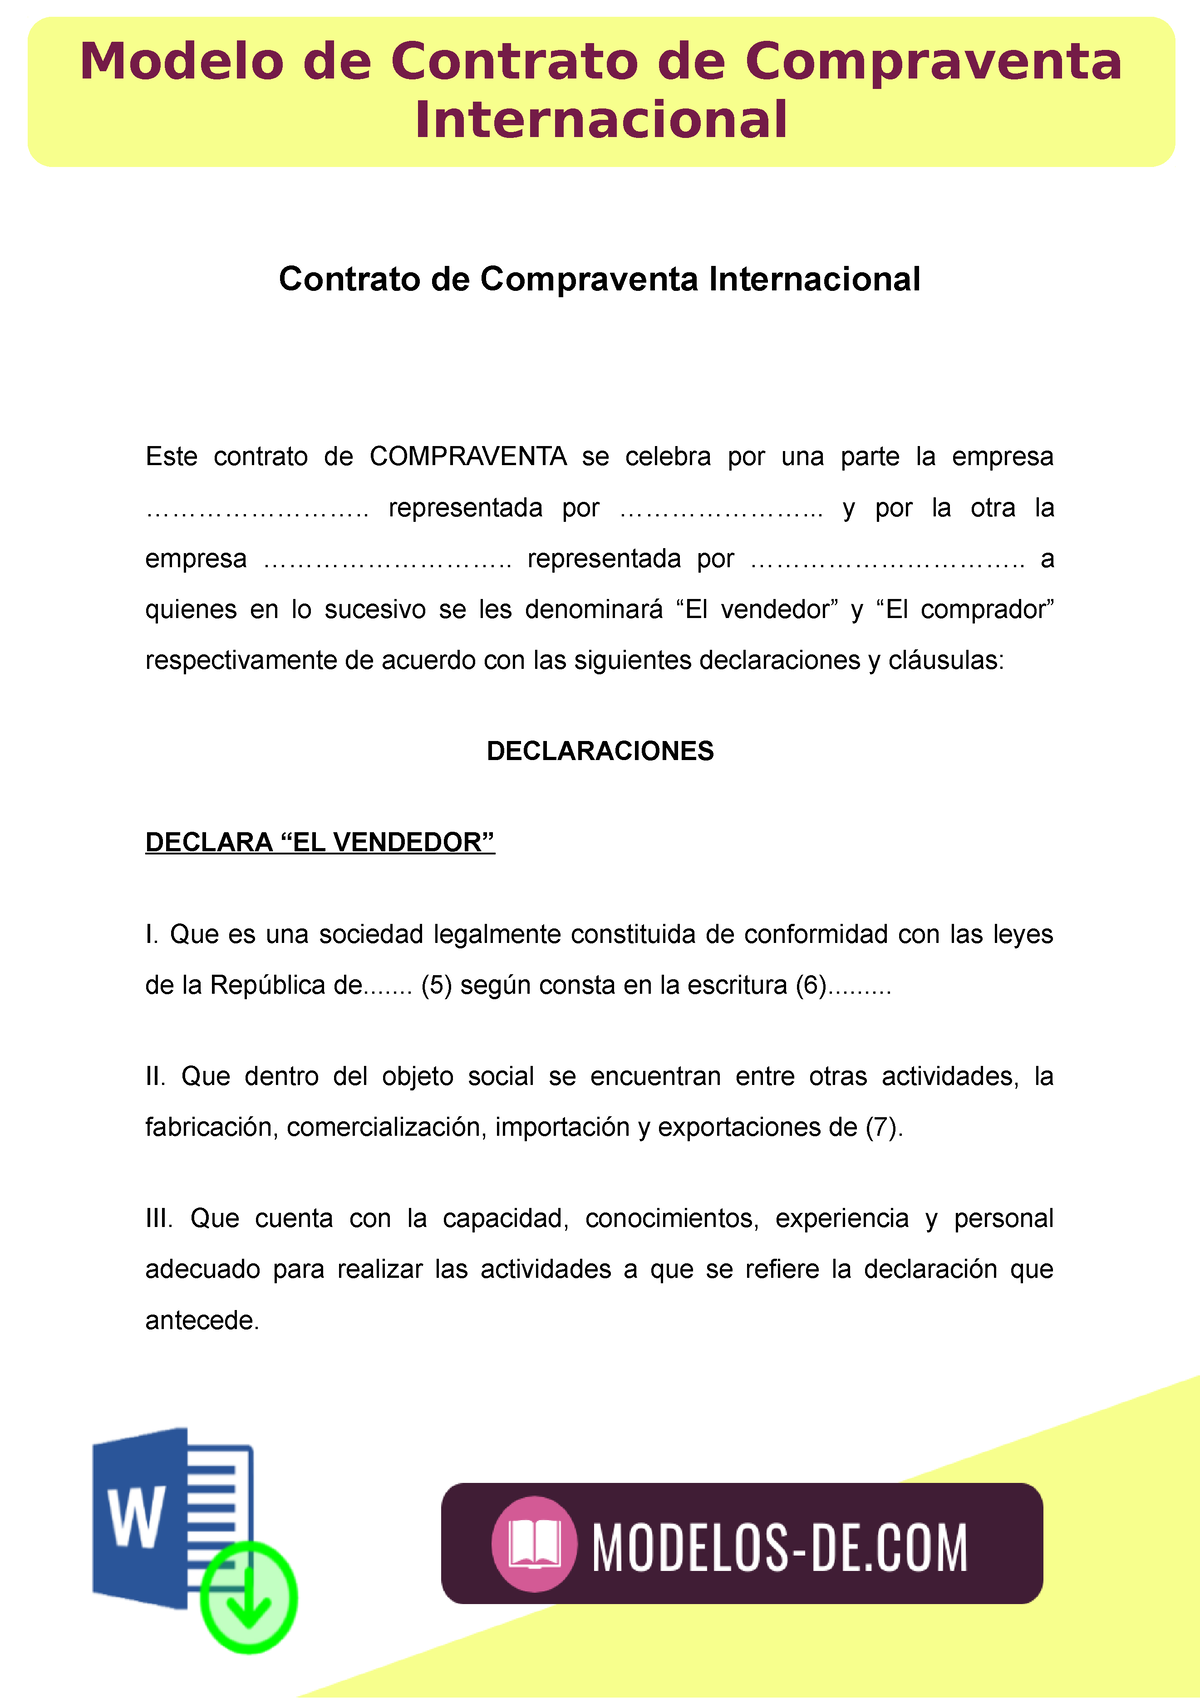 Modelo De Contrato De Compraventa Internacional Contrato De Compraventa Internacional Este 5928